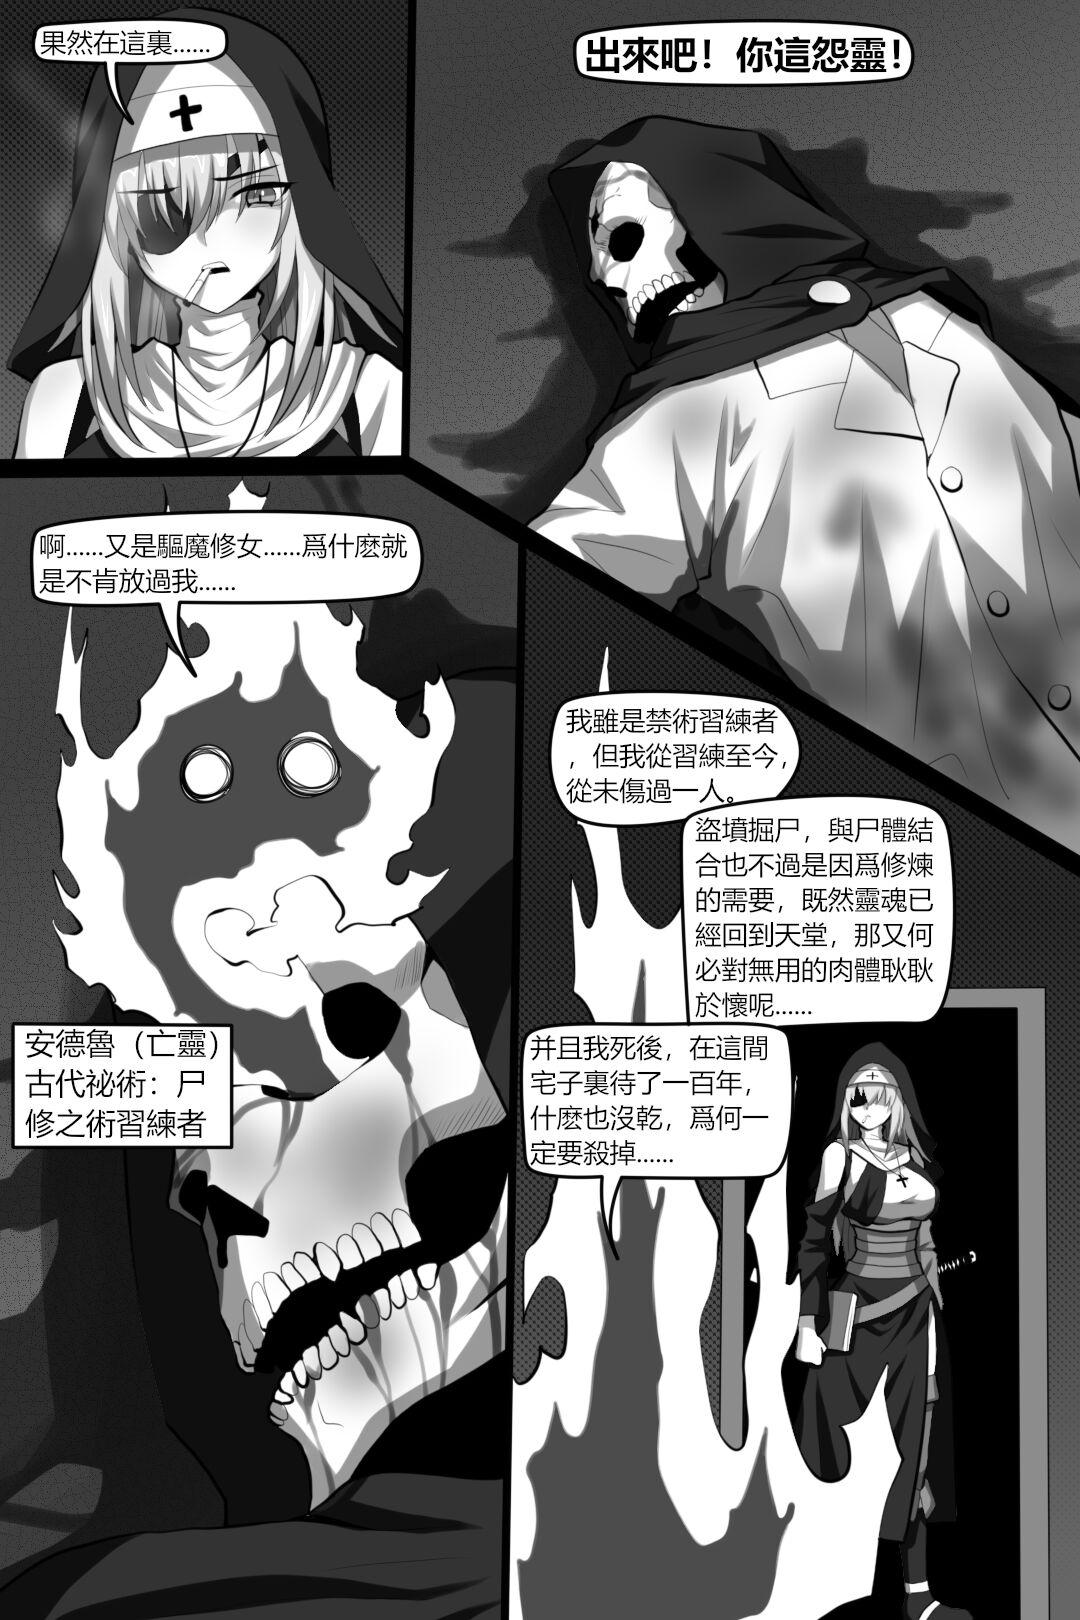 Wild Bin Lian City Stories Ch2: Exorcist Nun. - Original Yanks Featured - Page 6